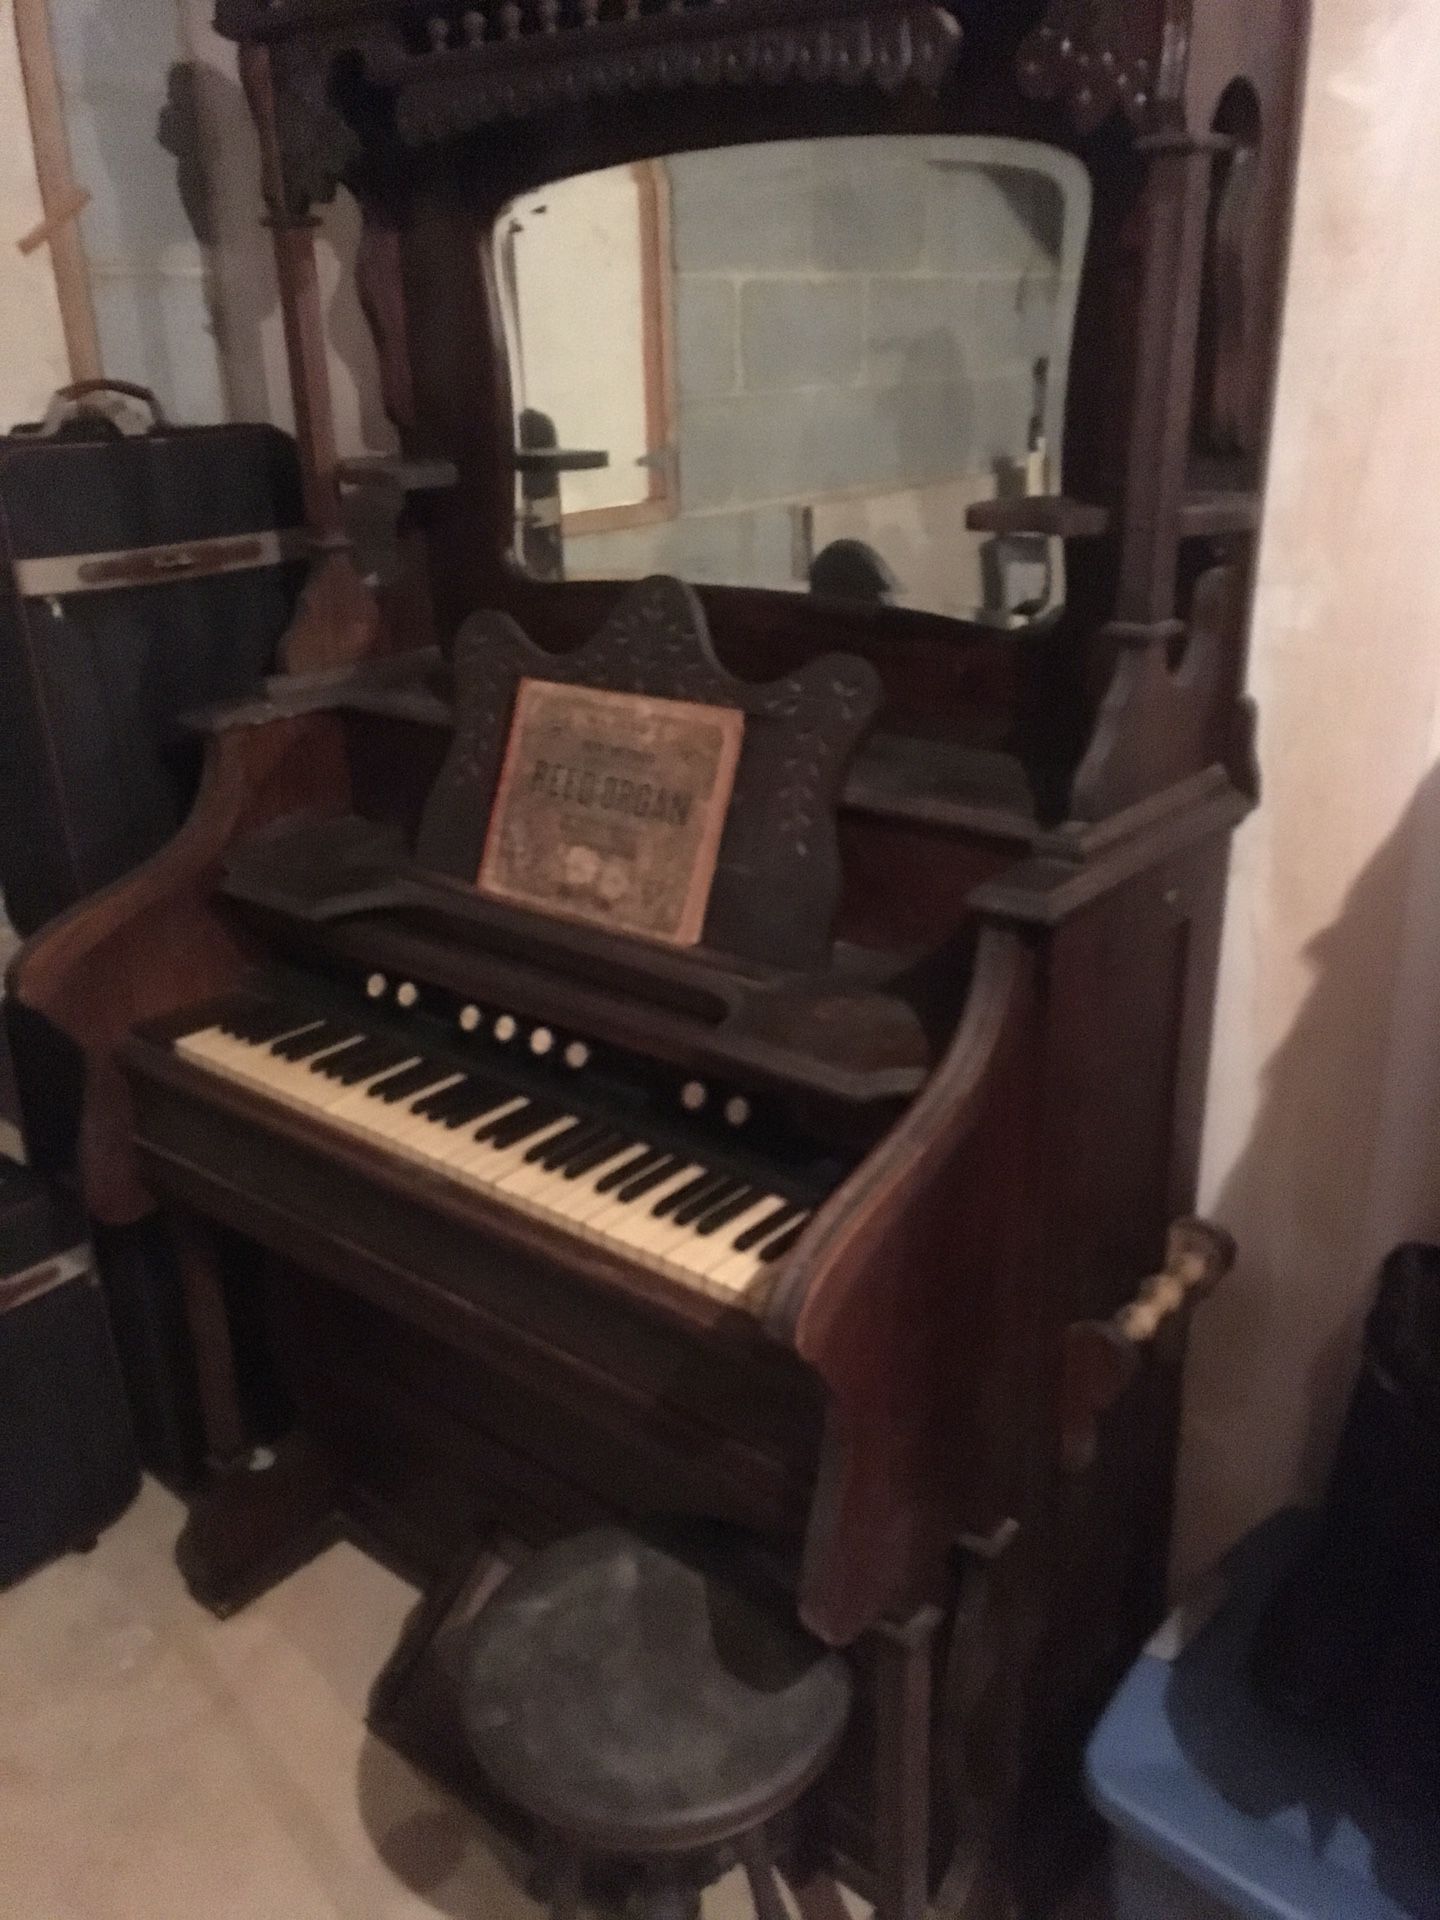 Antique Pump Organ made by Shipman Organ Company in High Point, NC